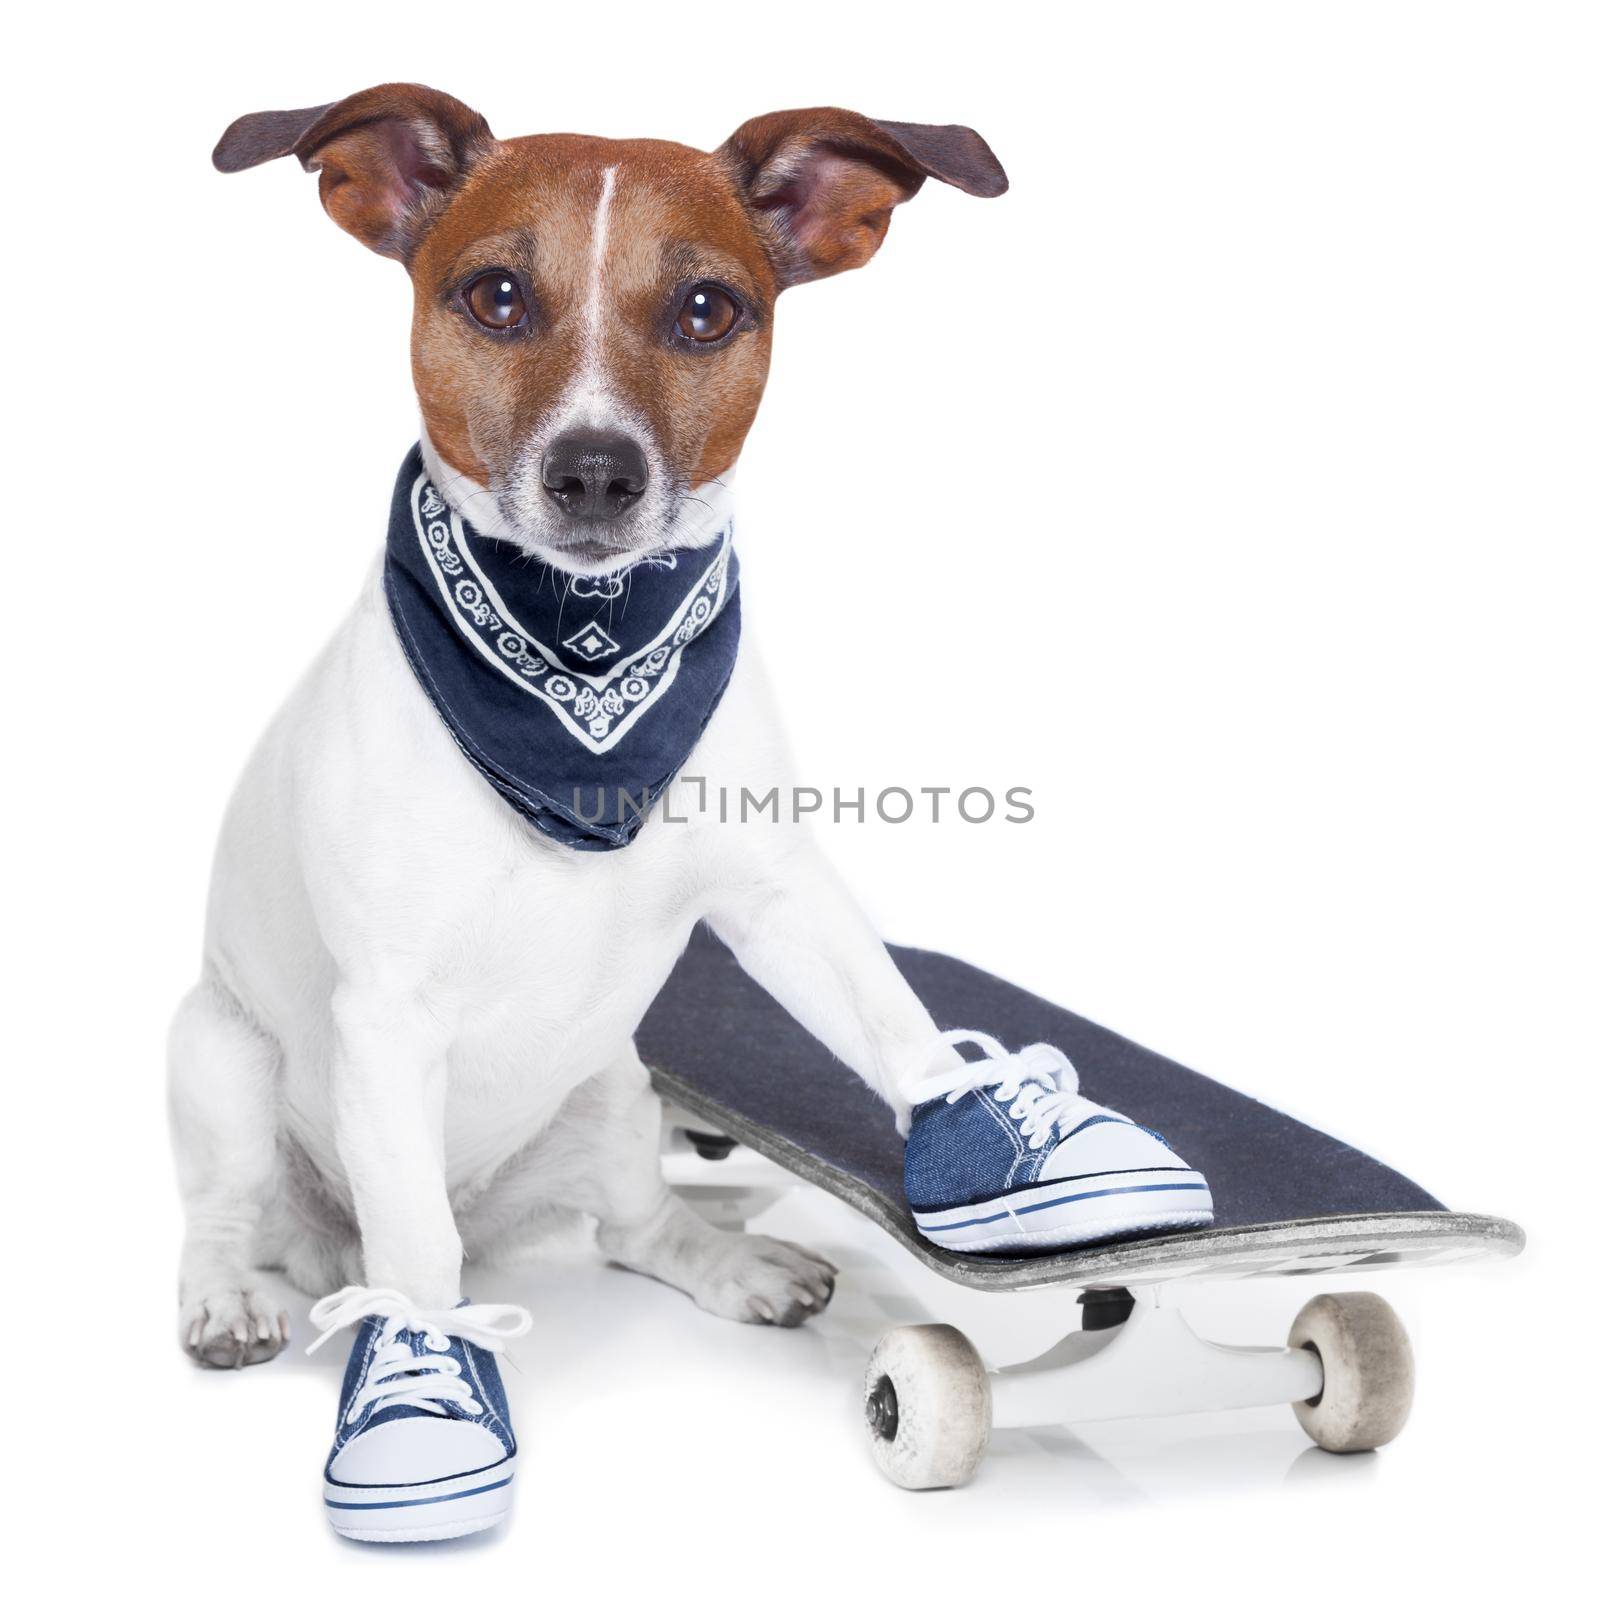 skateboard dog by Brosch